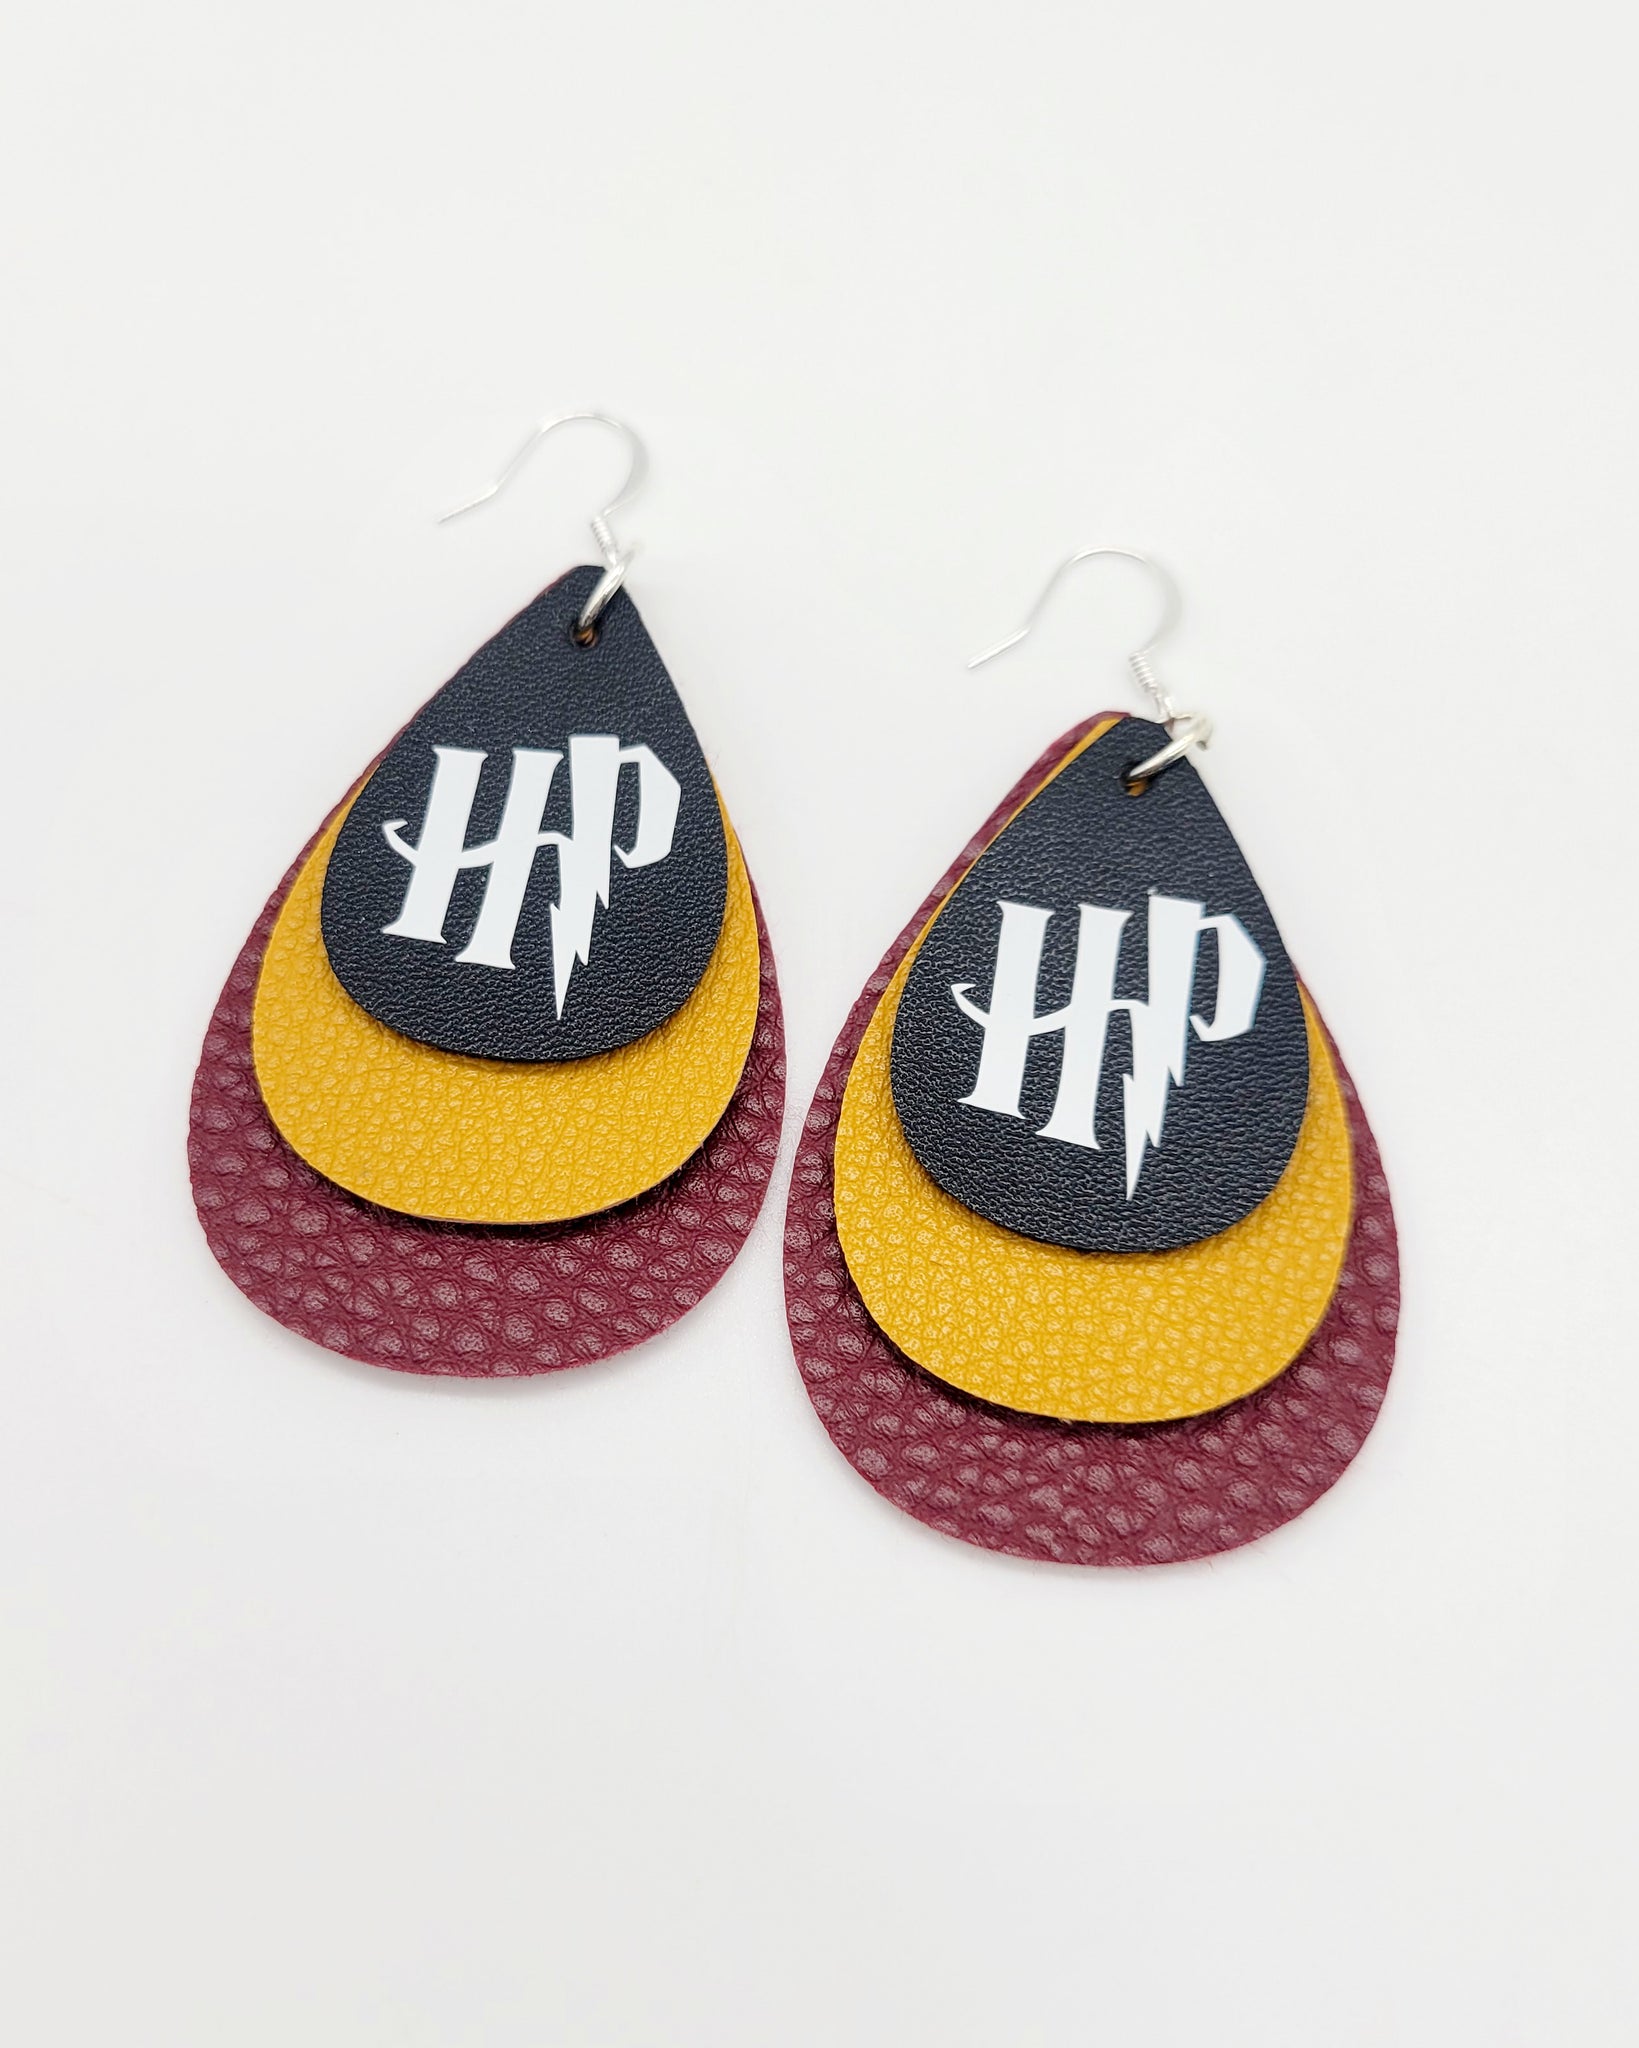 Harry Potter House Earrings